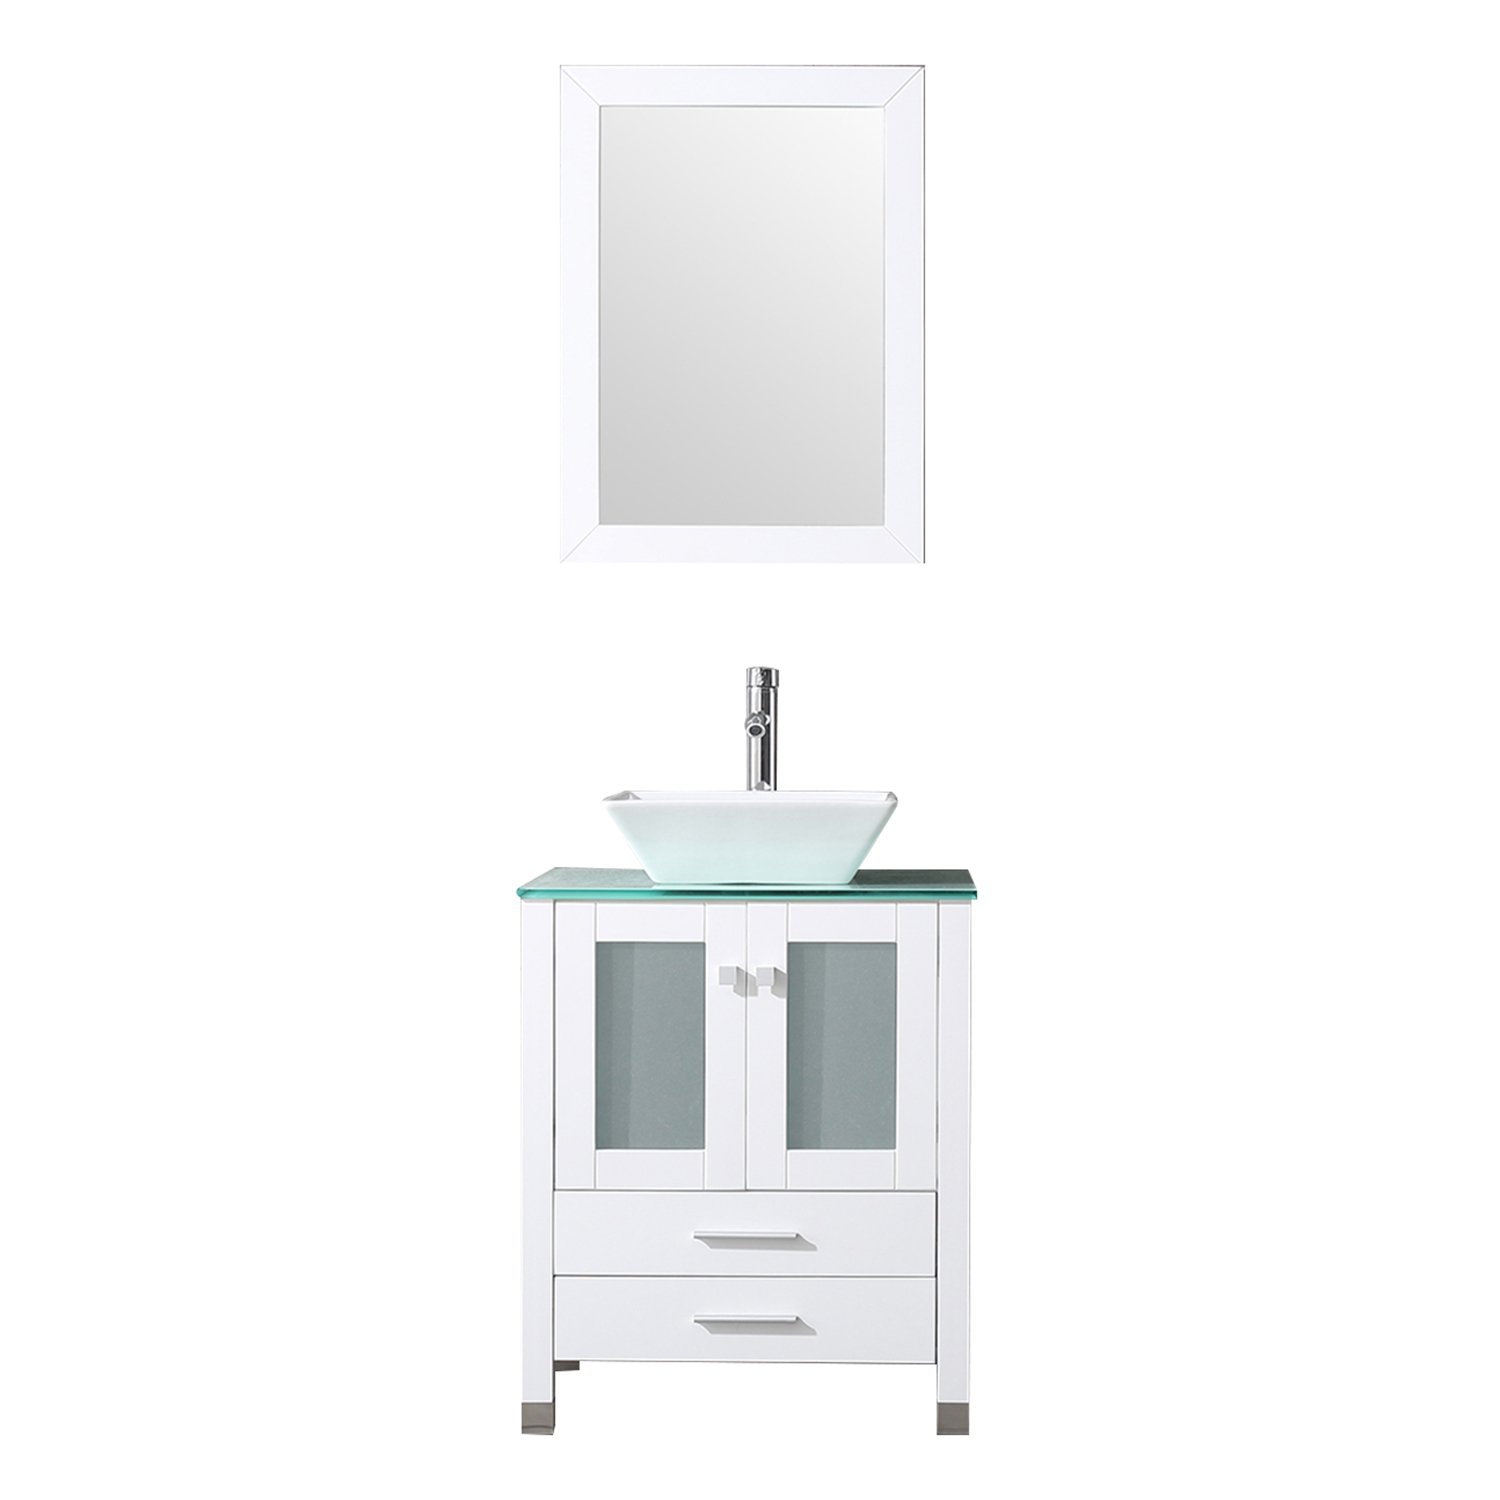 BATHJOY Bathroom Wood Vanity Cabinet with Mirror